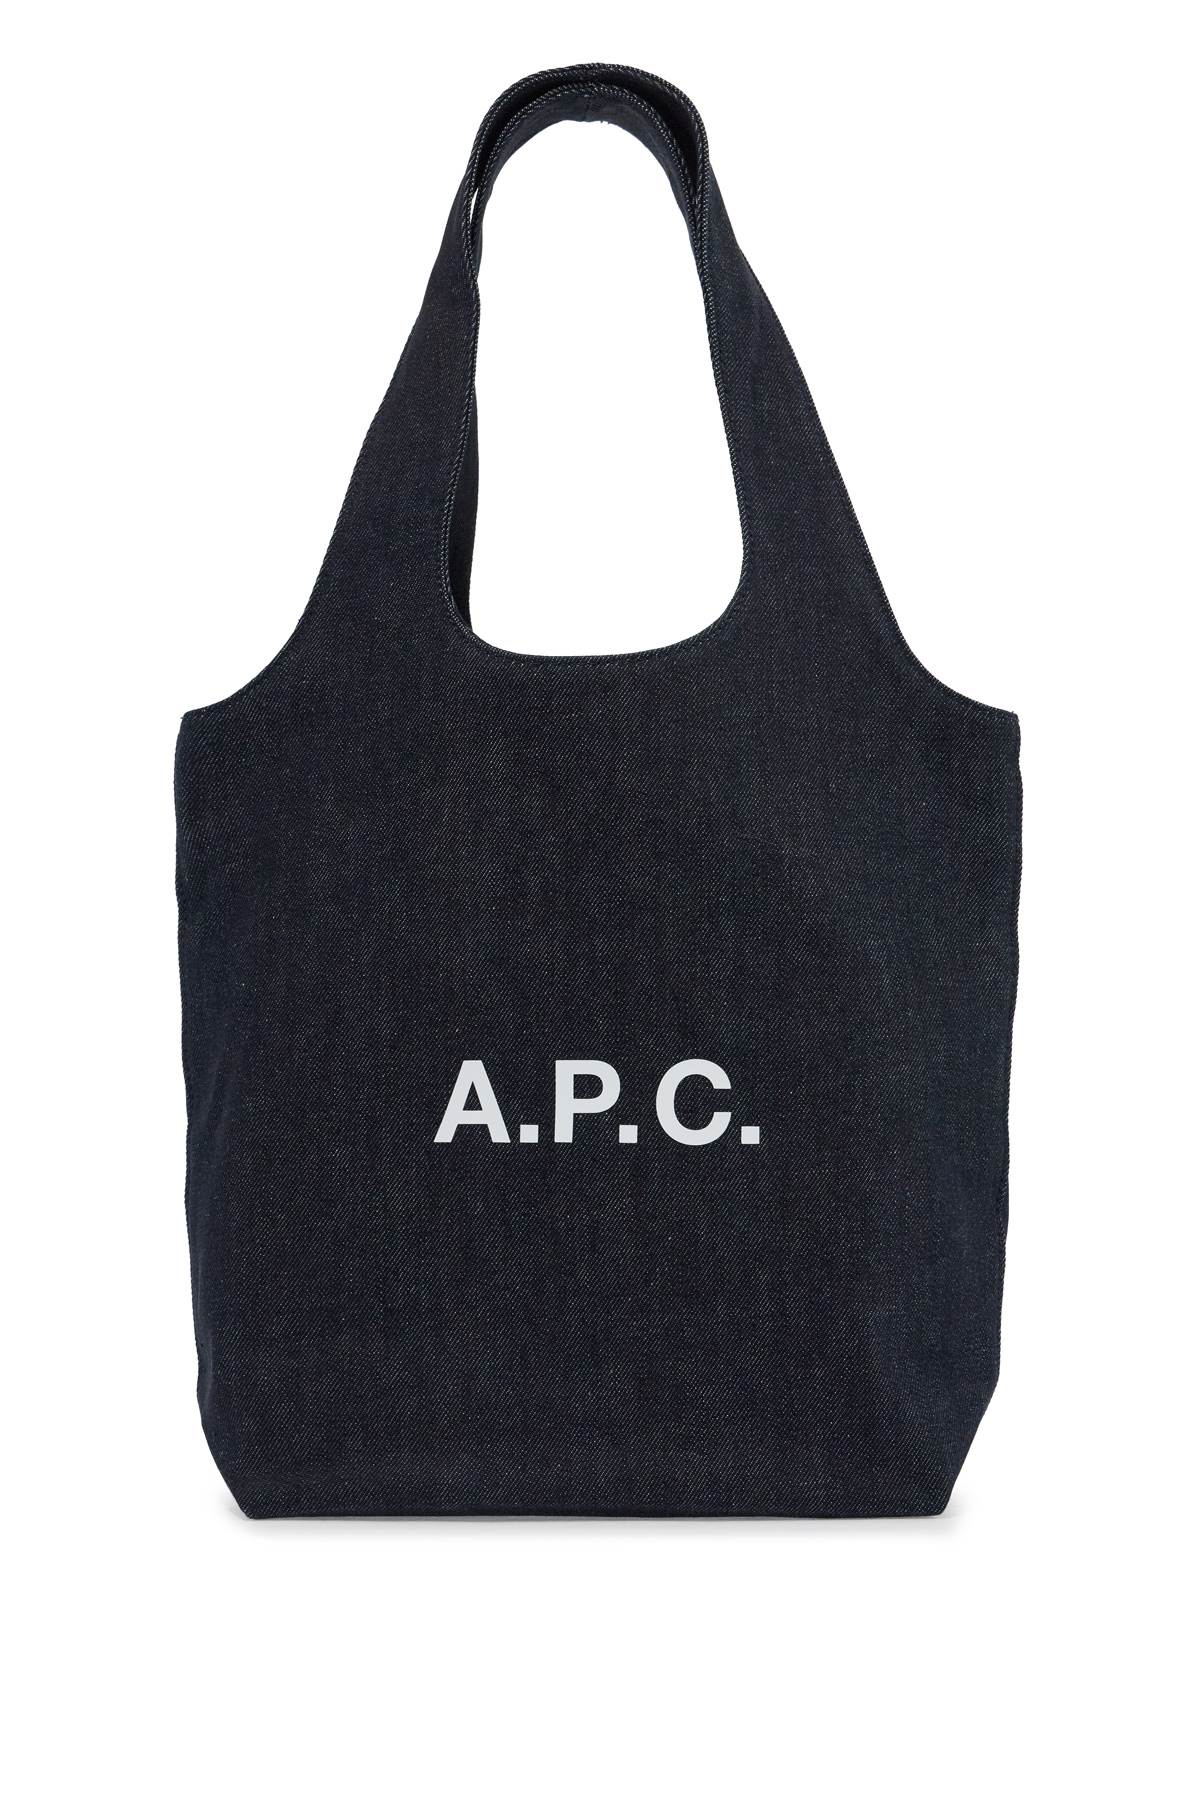 A.P.C. A. P.C. ninon tote bag